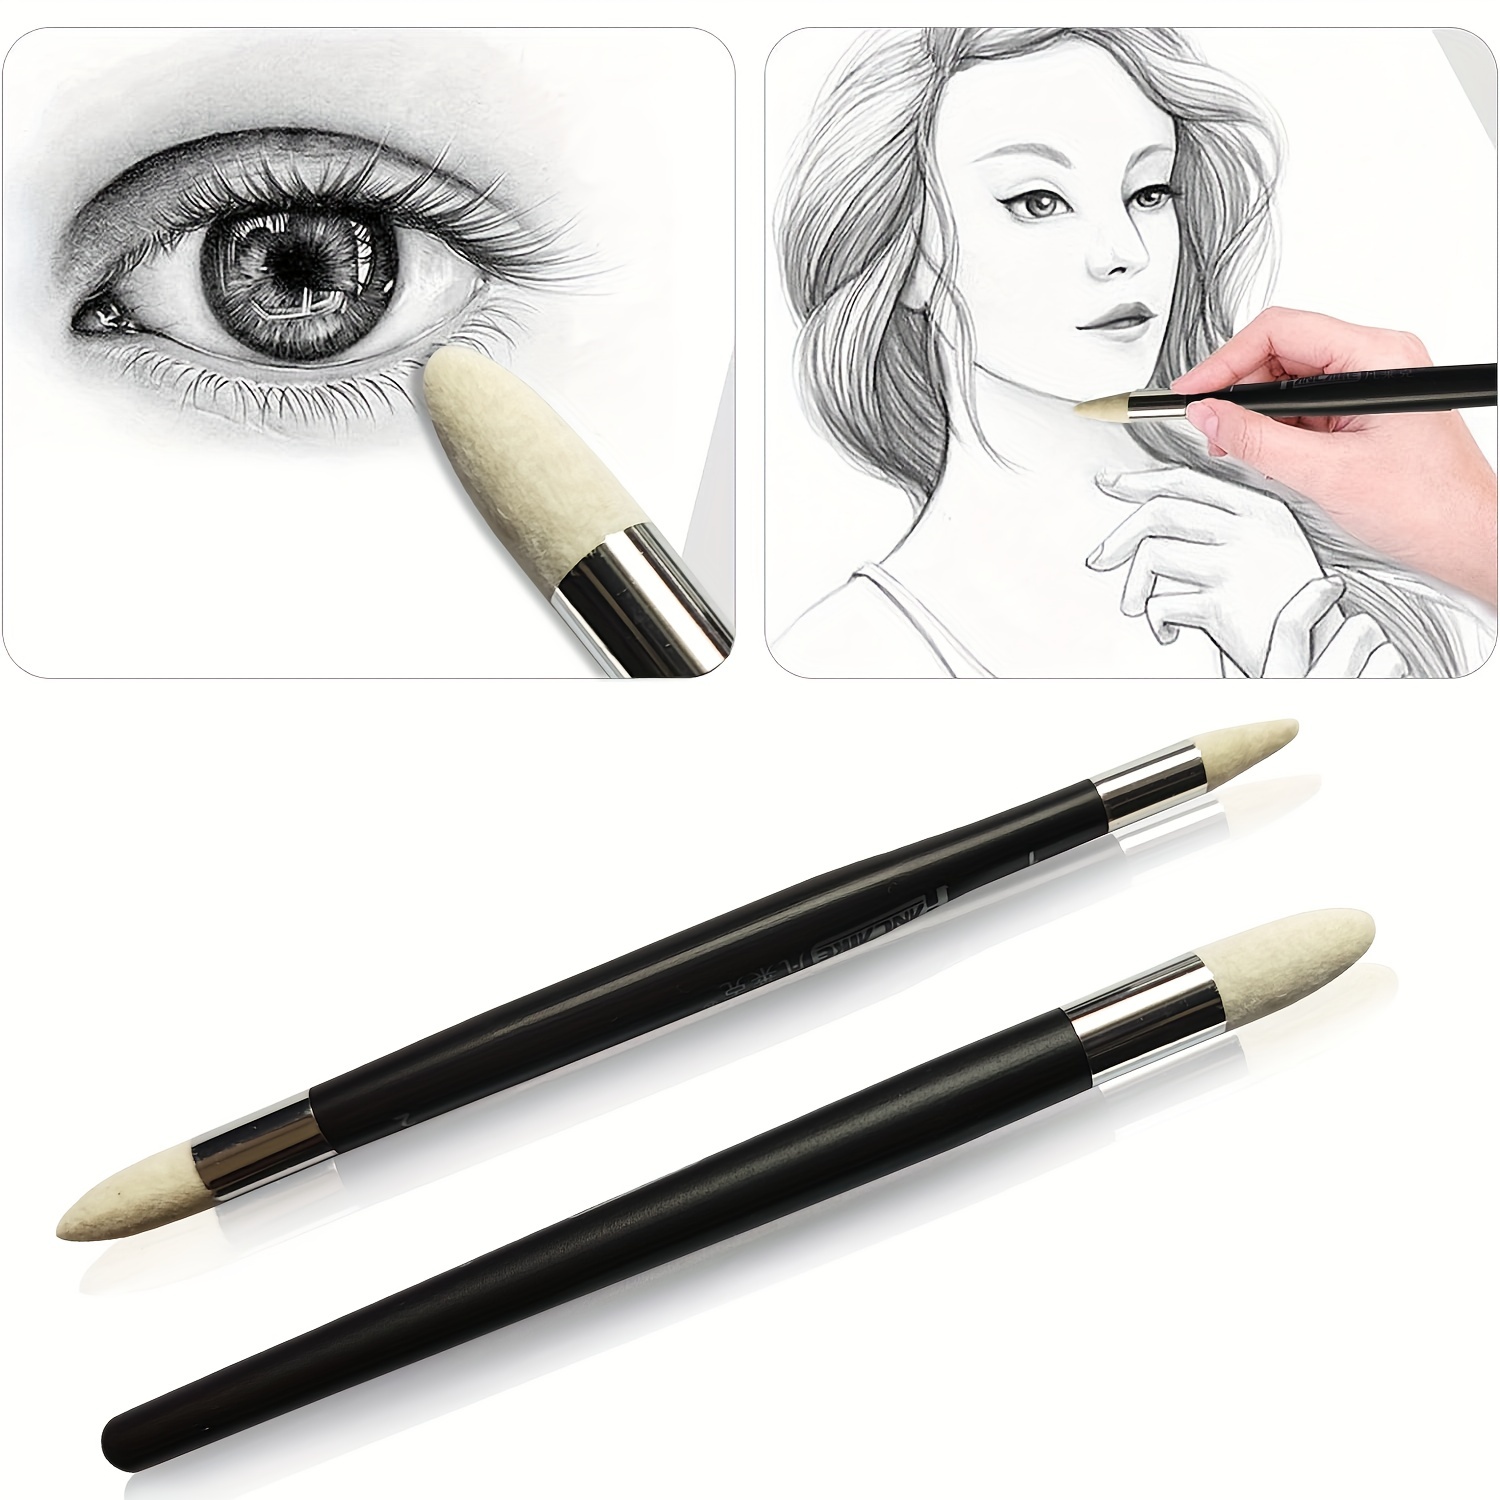 2pcs Sketch Pen Sponge Art Paintbrush Sets Sketching Brush Wipe Pen  Washable Shading Pen Art Rubbing Tool For Student Artist Painter Charcoal  Sketch D